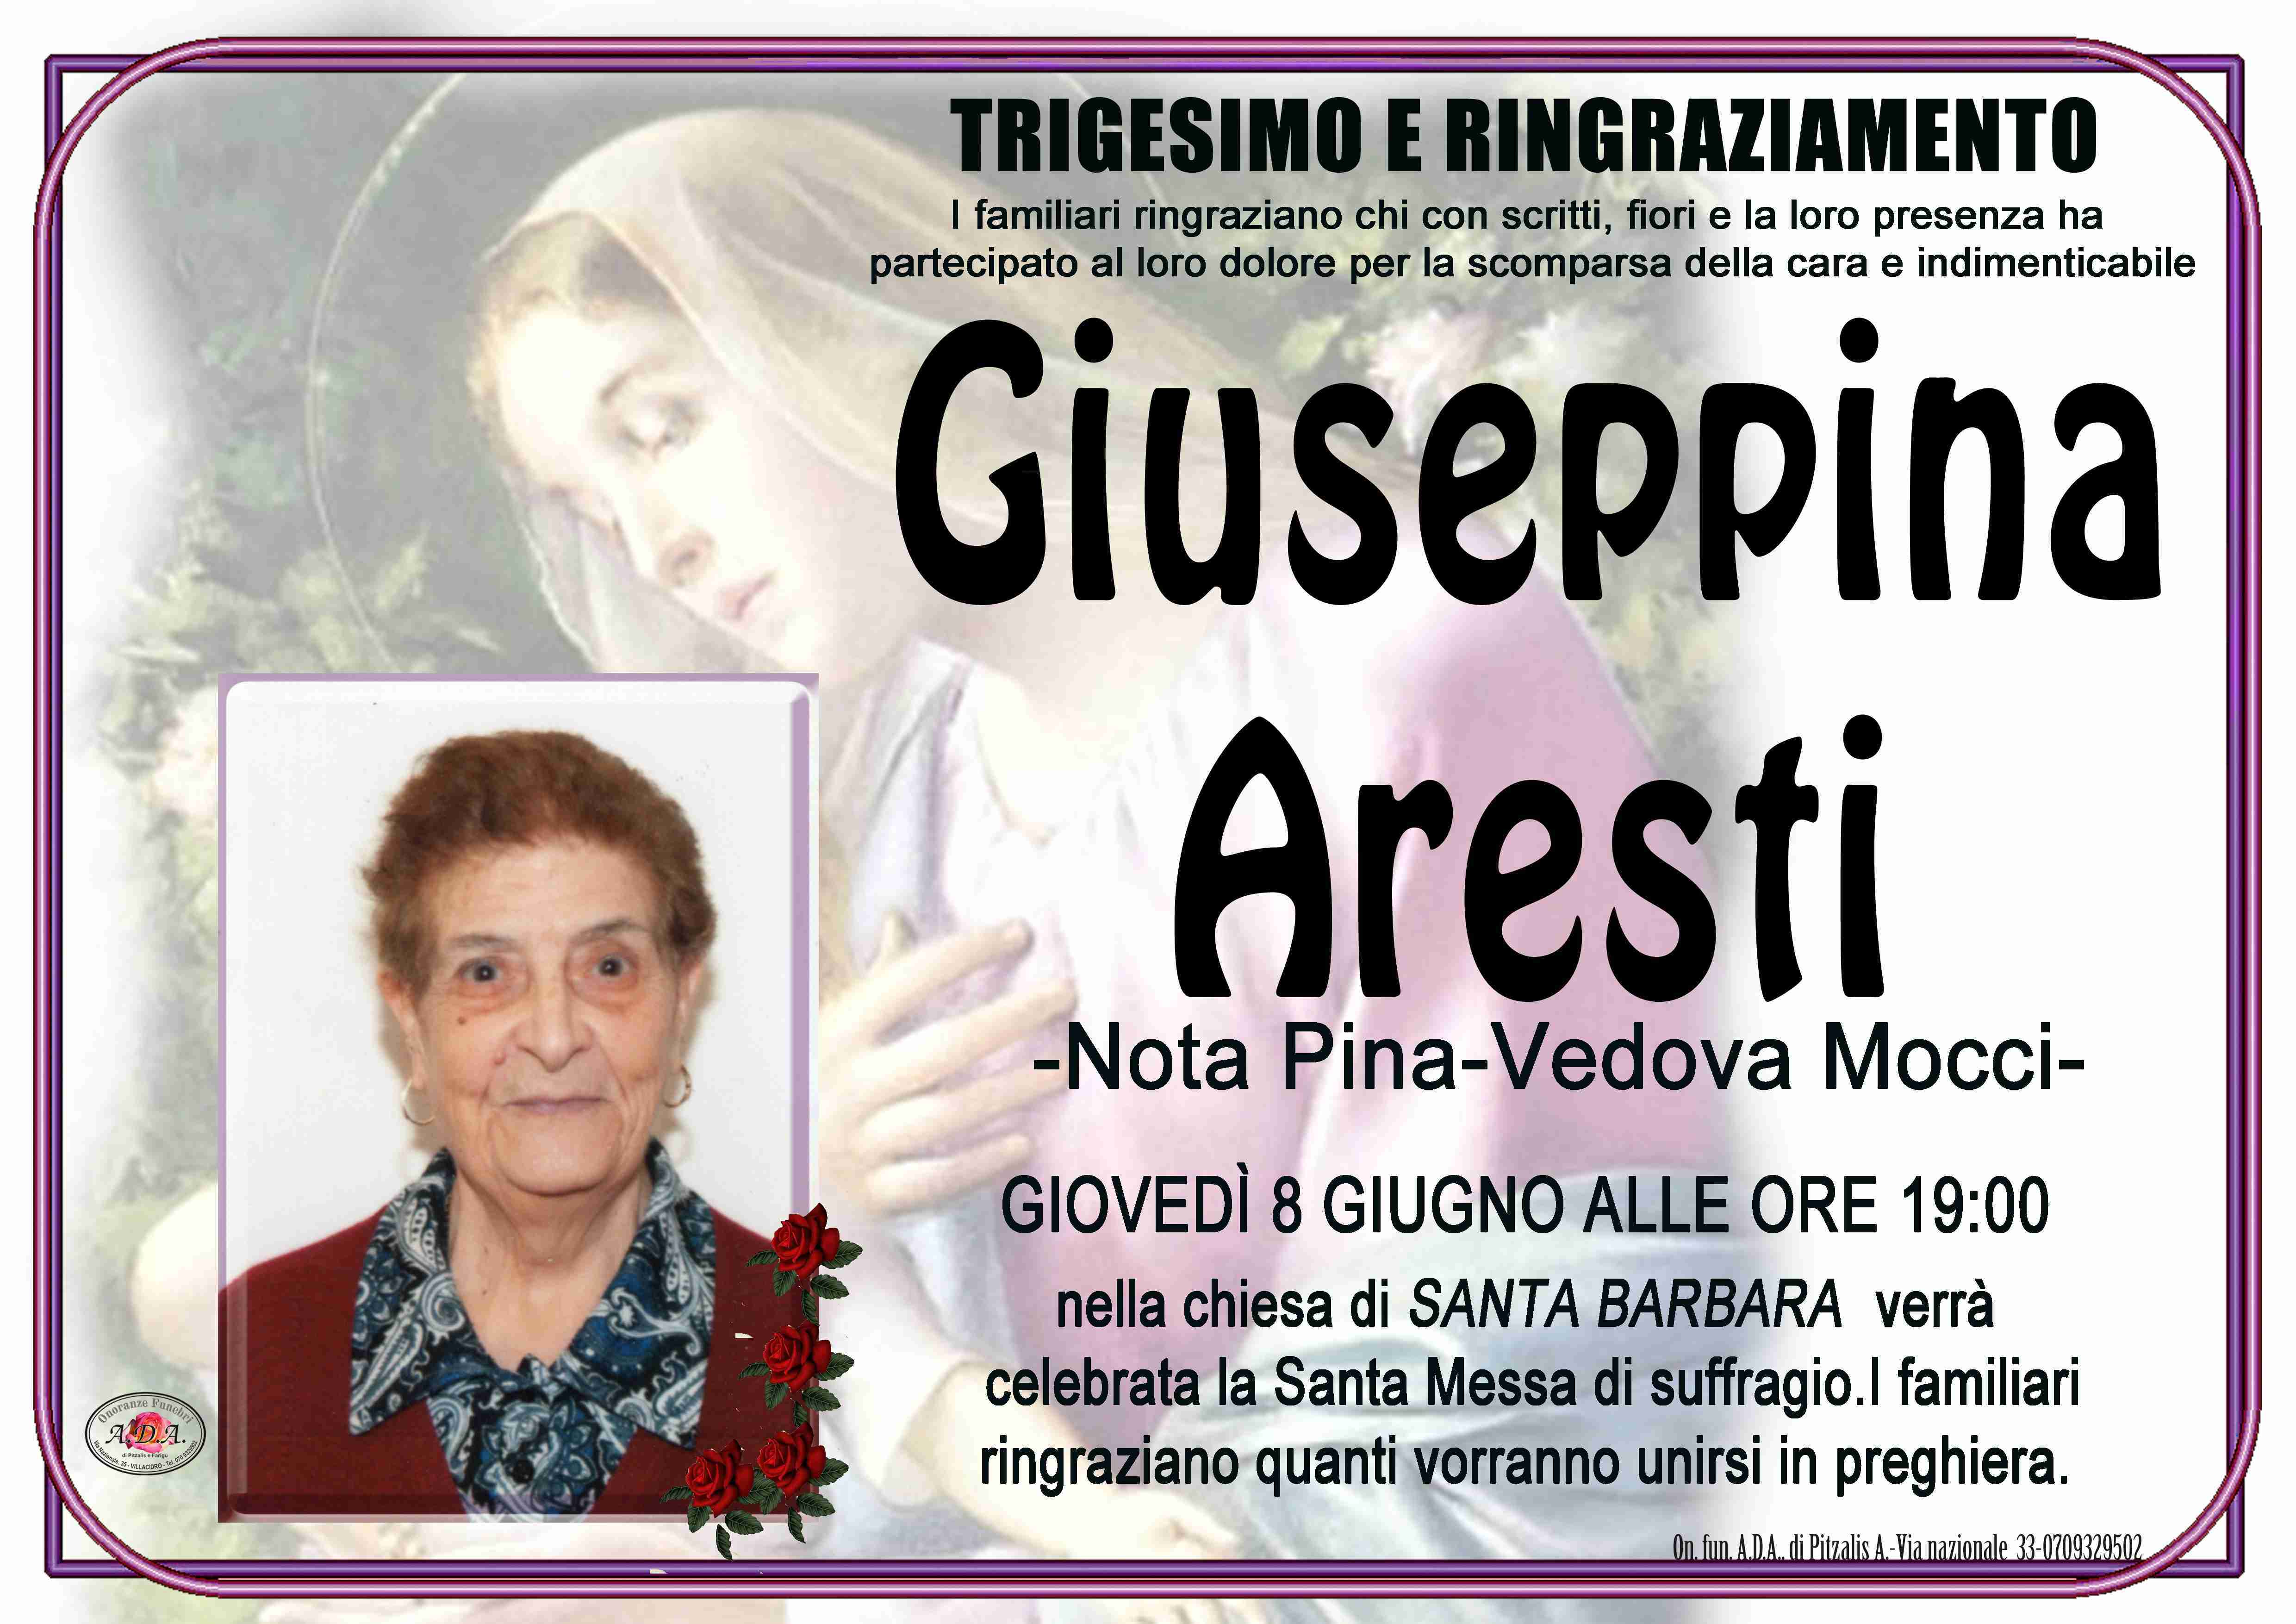 Giuseppina Aresti